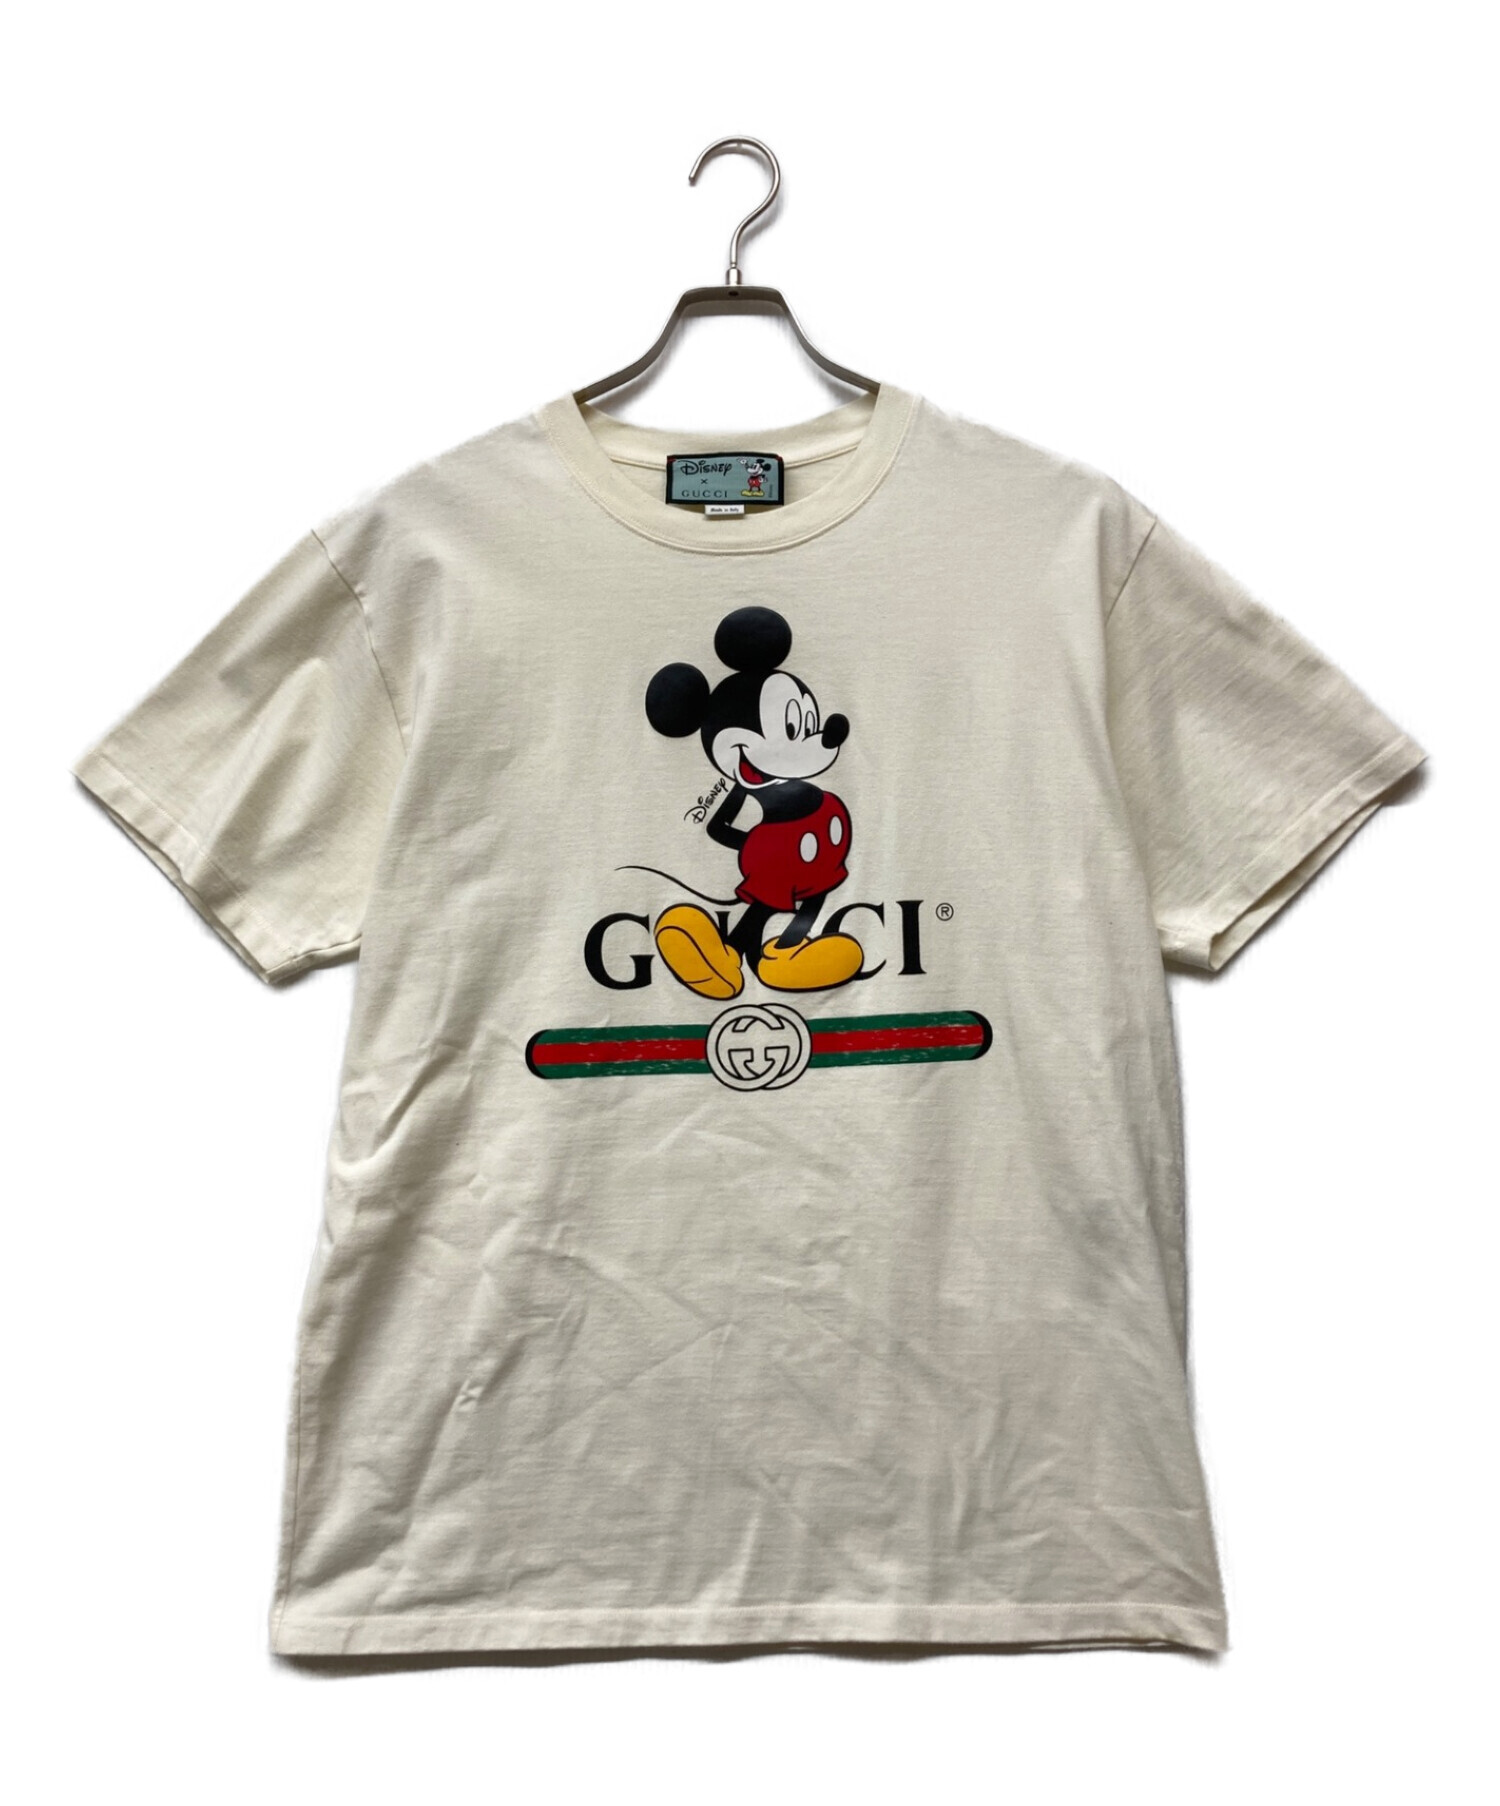 Disney×GUCCI (ディズニー×グッチ) ディズニーコラボオーバーサイズTシャツ ホワイト サイズ:S